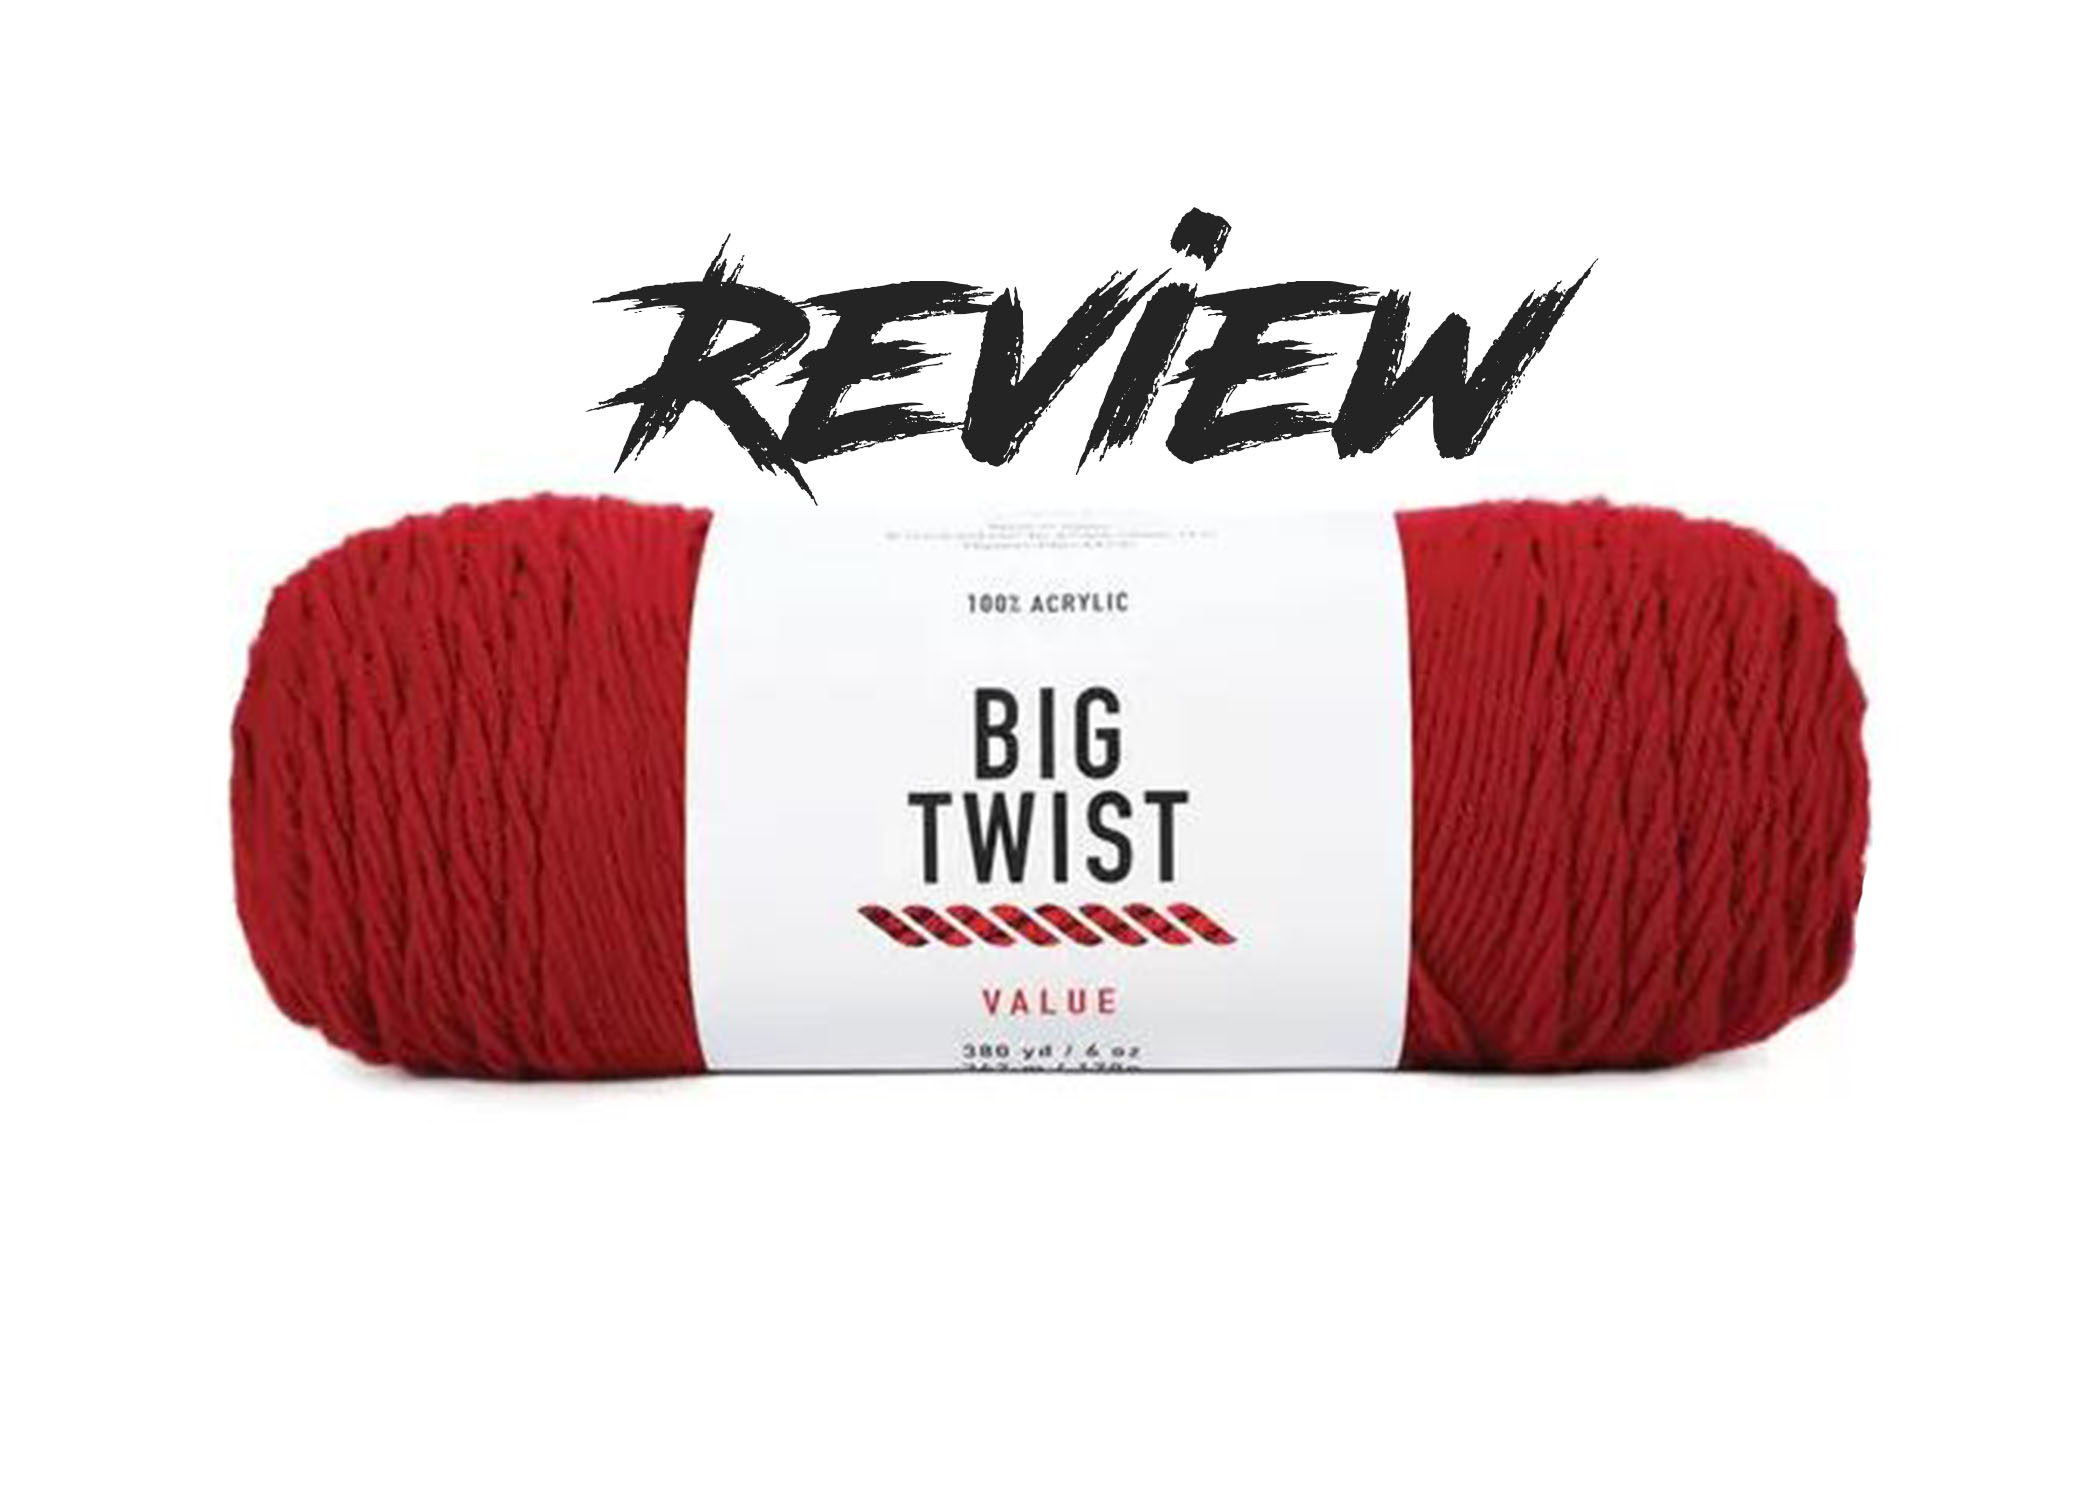 Big Twist Value Yarn Review - Knot Bad